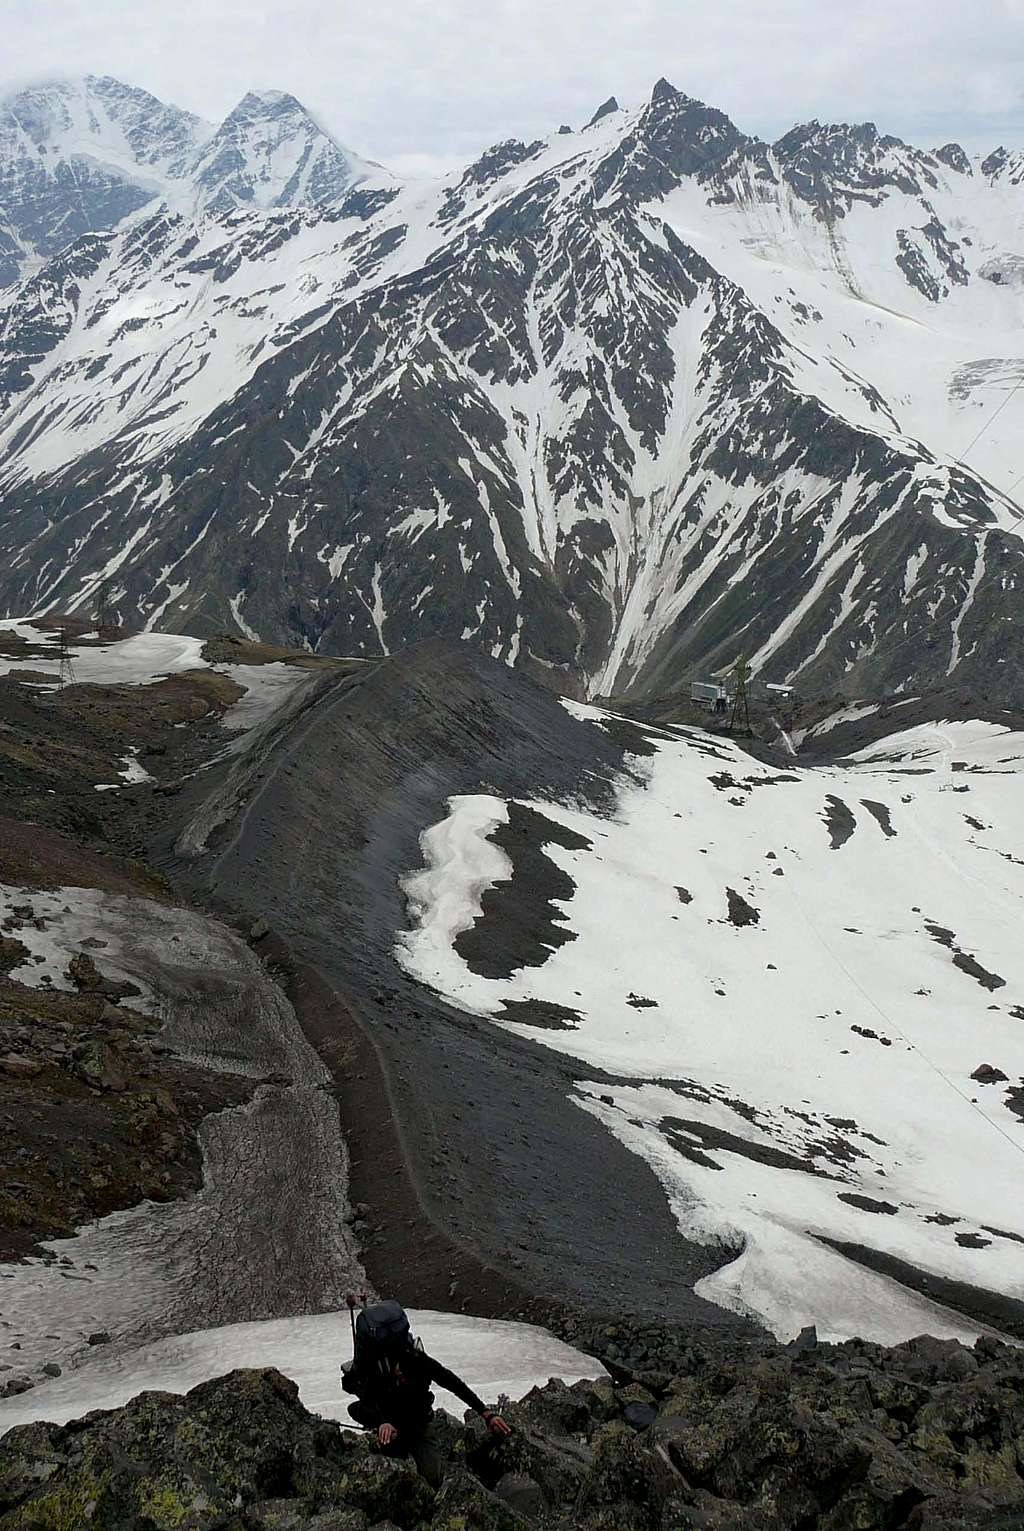 No rock climbing on Elbrus?